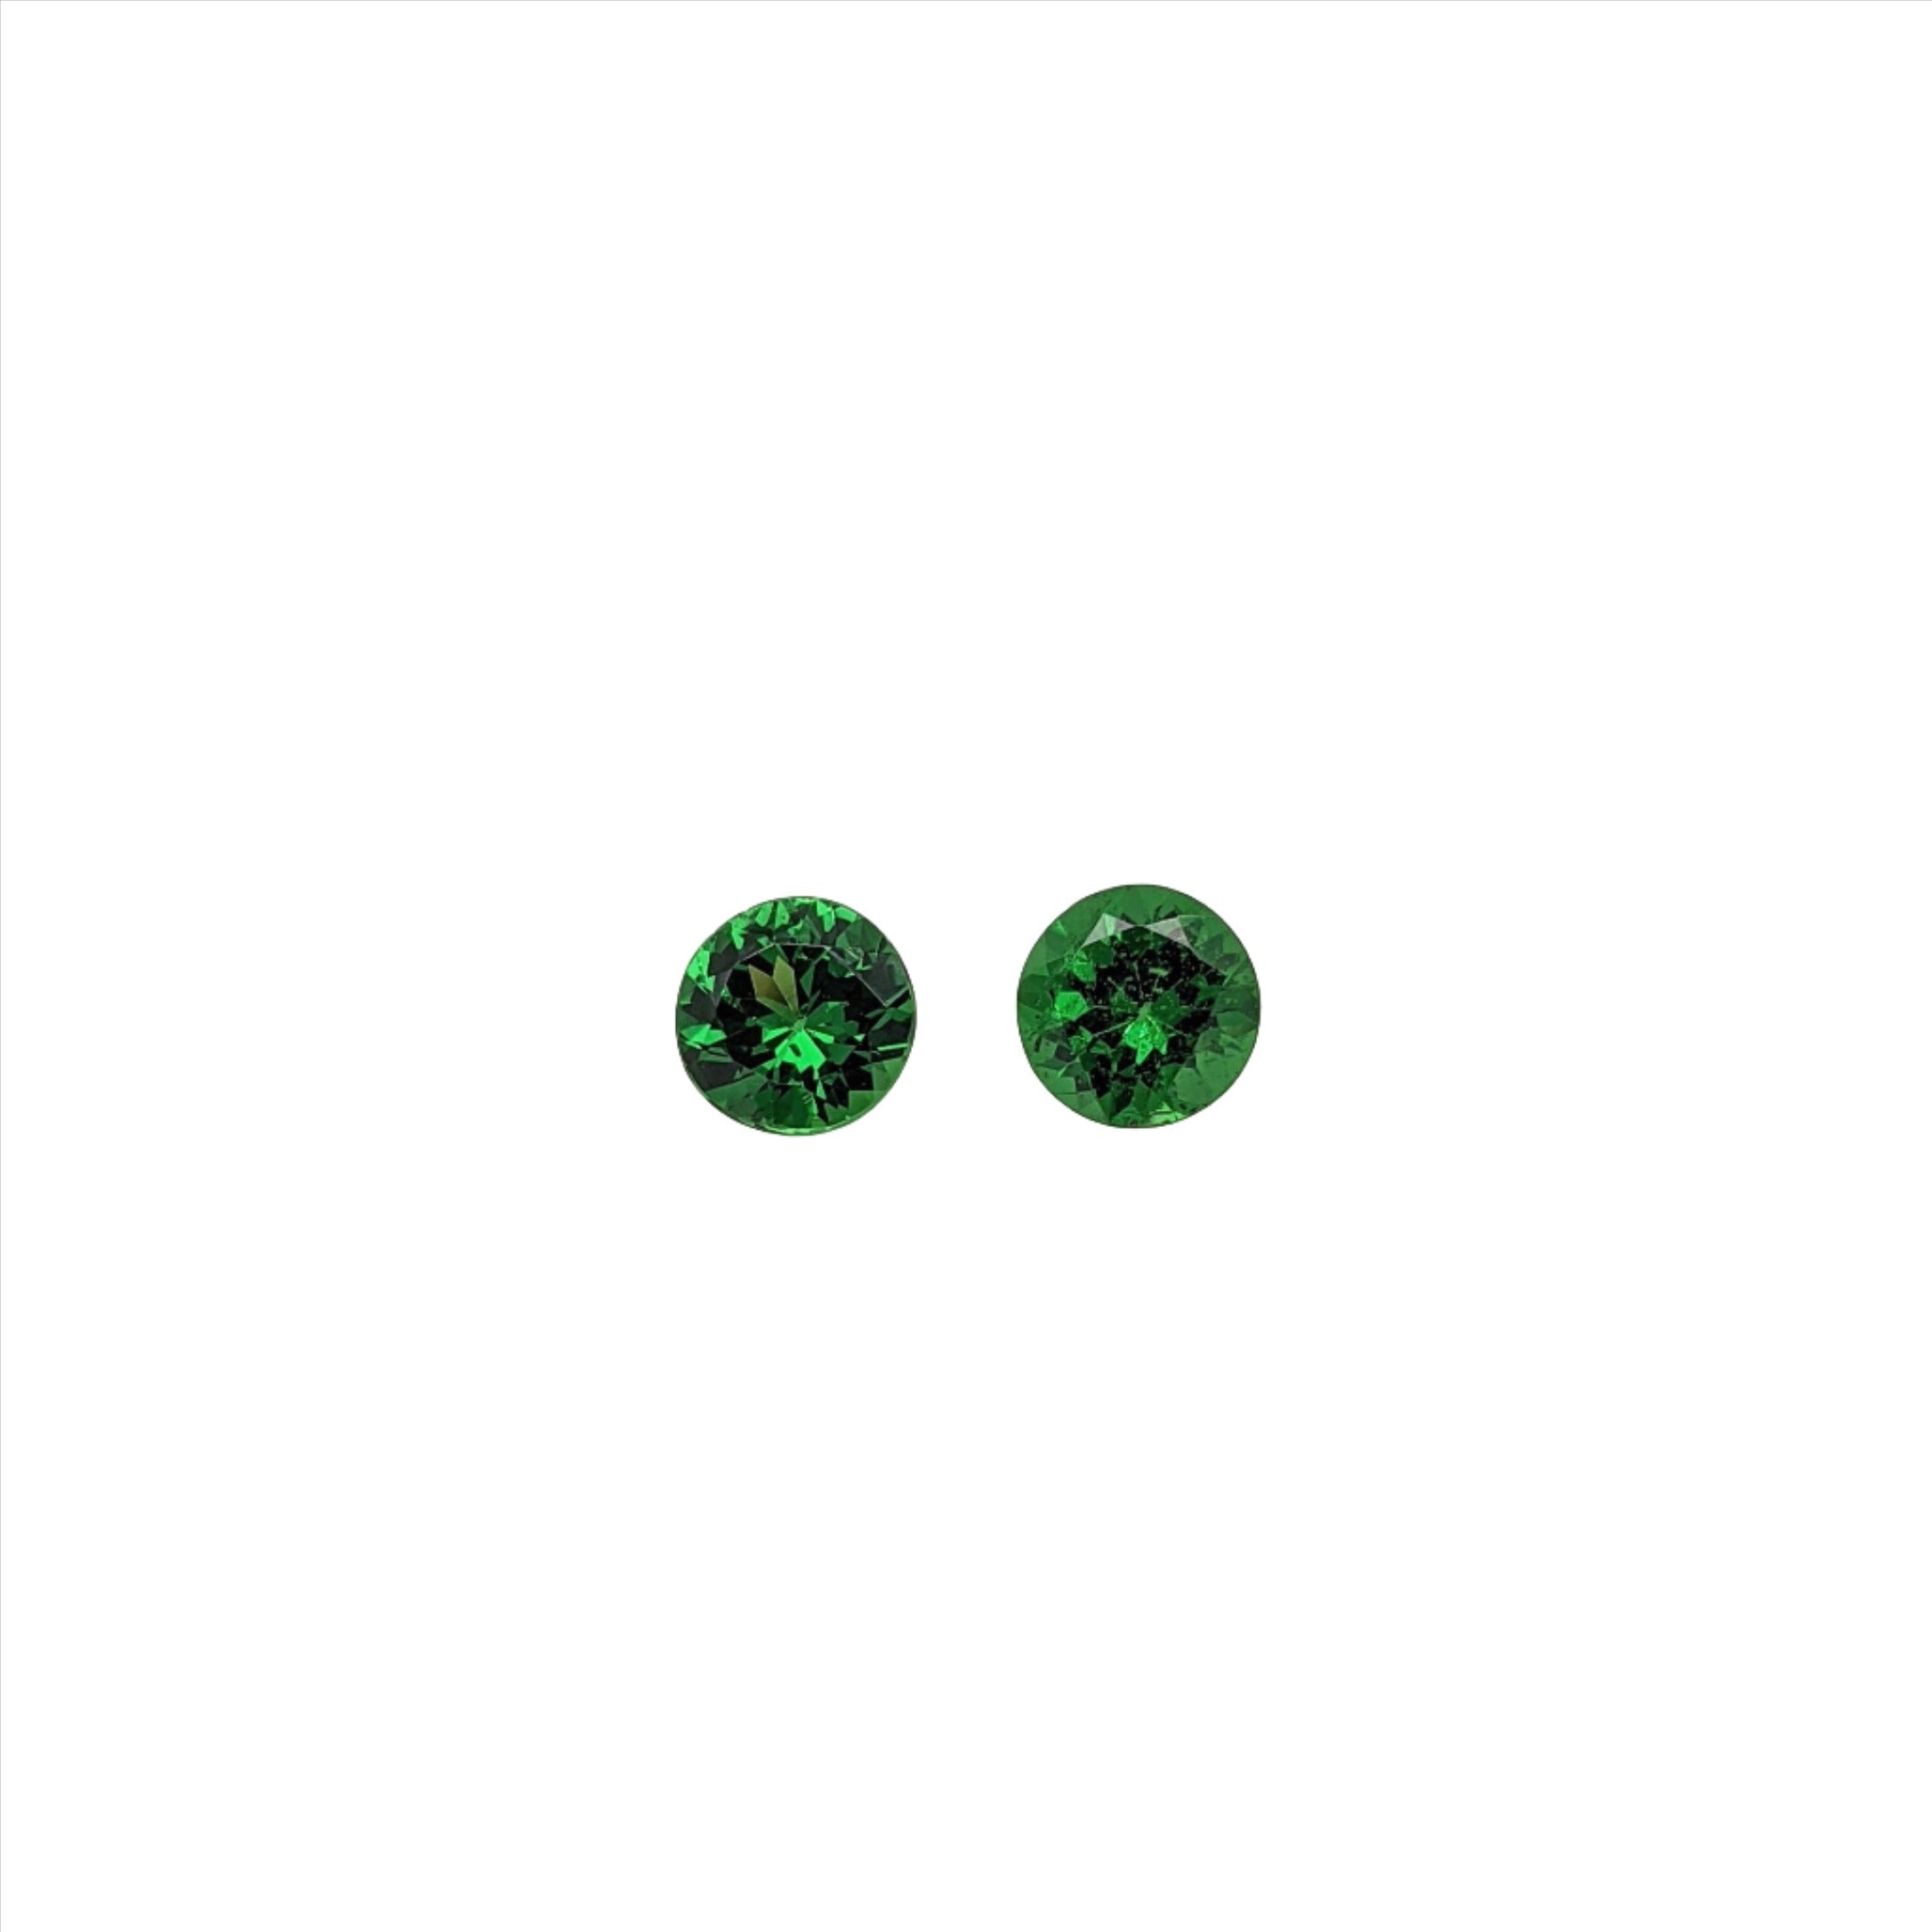 Natural and Untreated Green Tsavorite Garnet Loose Gemstones | Round 4mm 5mm | January Birthstone | Jewelry Center Stone | Pair | Semi Mount